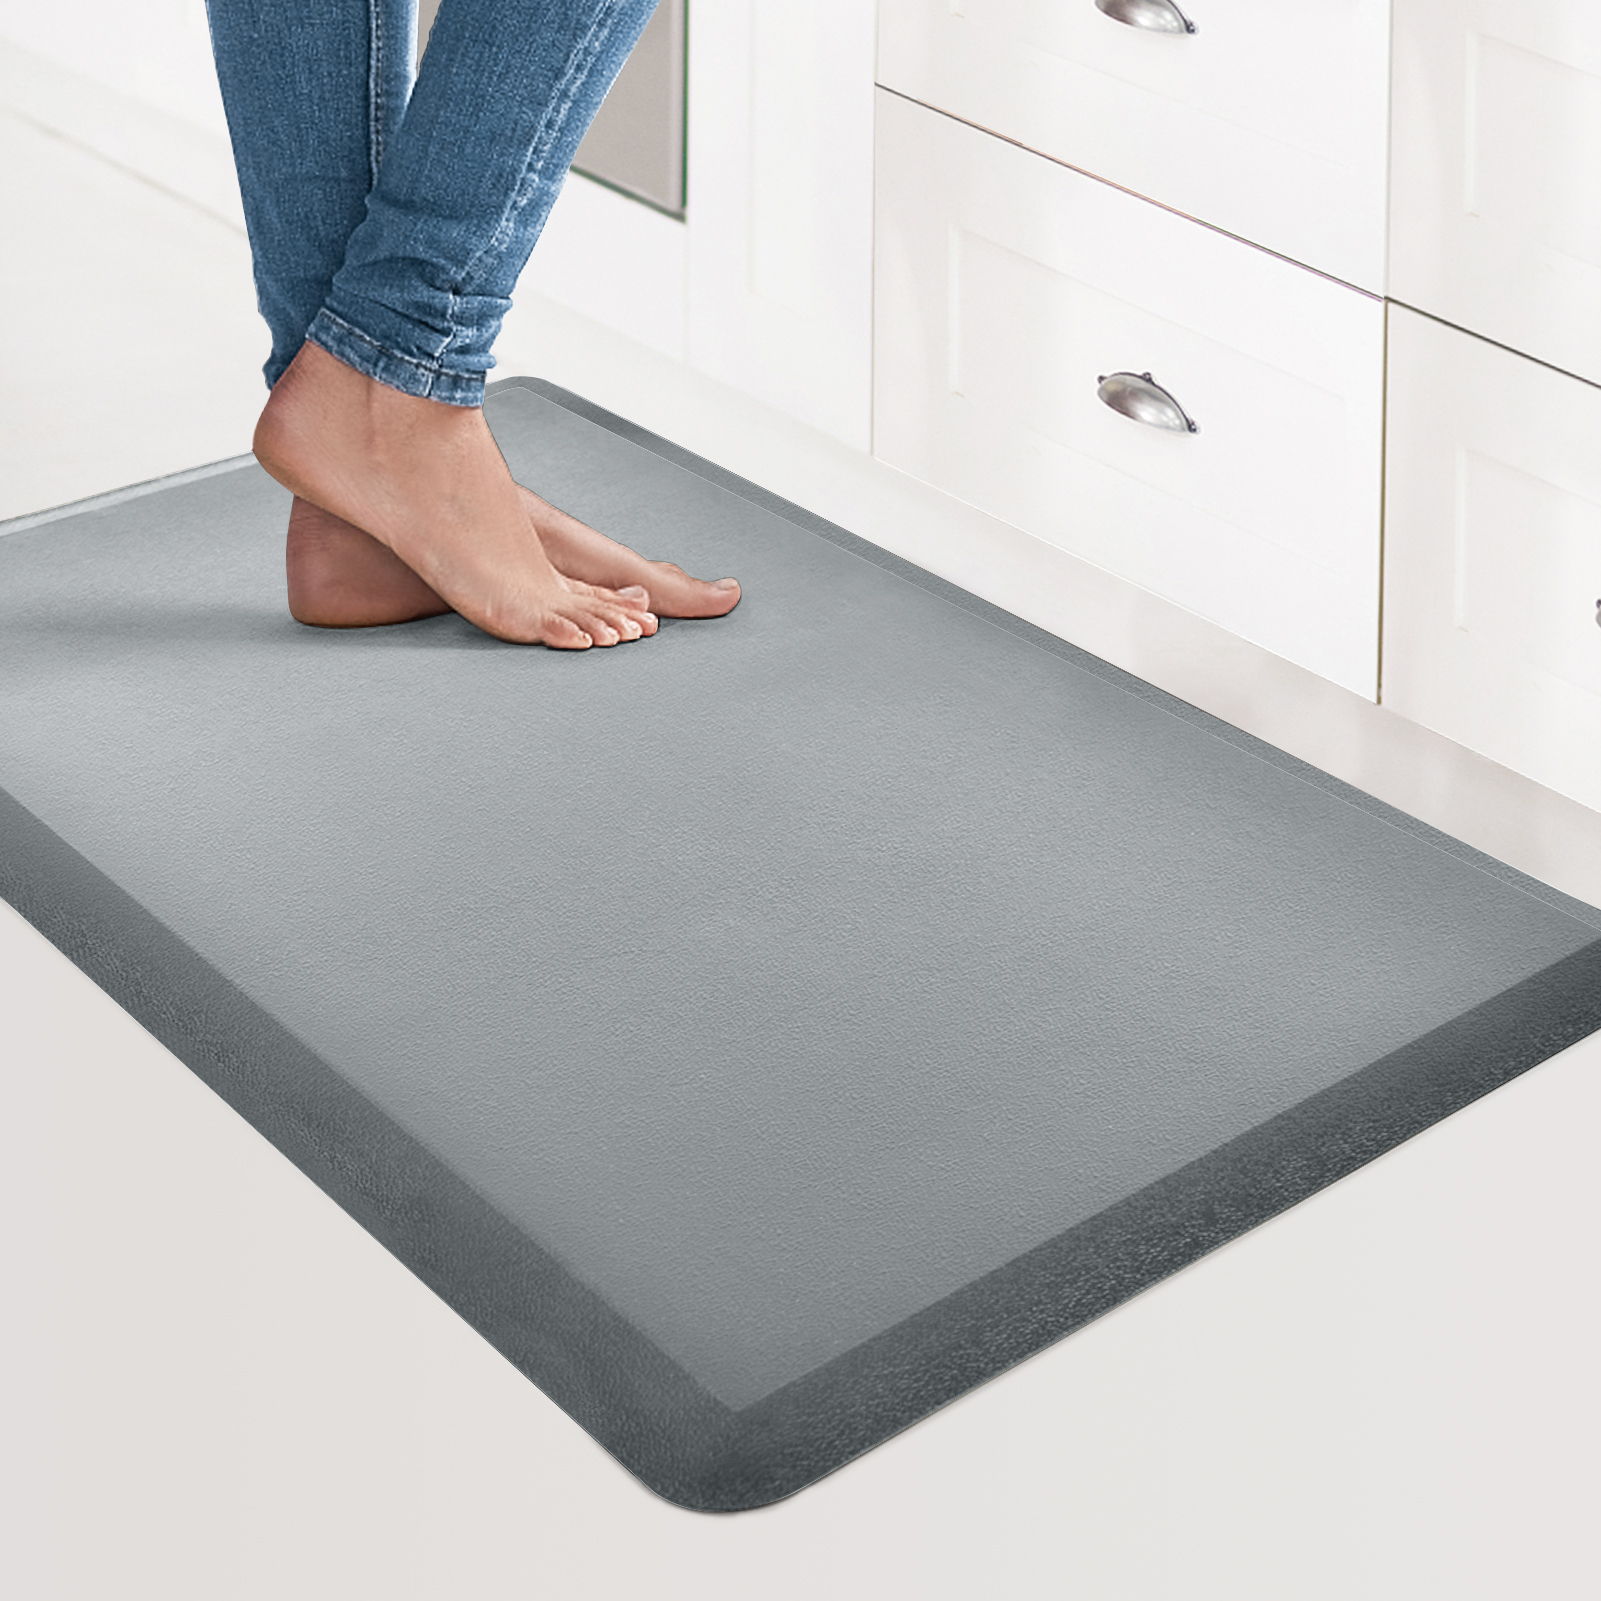 Y12001MB-Art3d Anti Fatigue Mat - 1/2 Inch Cushioned Kitchen Mat - Non Slip  Foam Comfort Cushion for Standing Desk, Office or Garage Floor (17.3x28